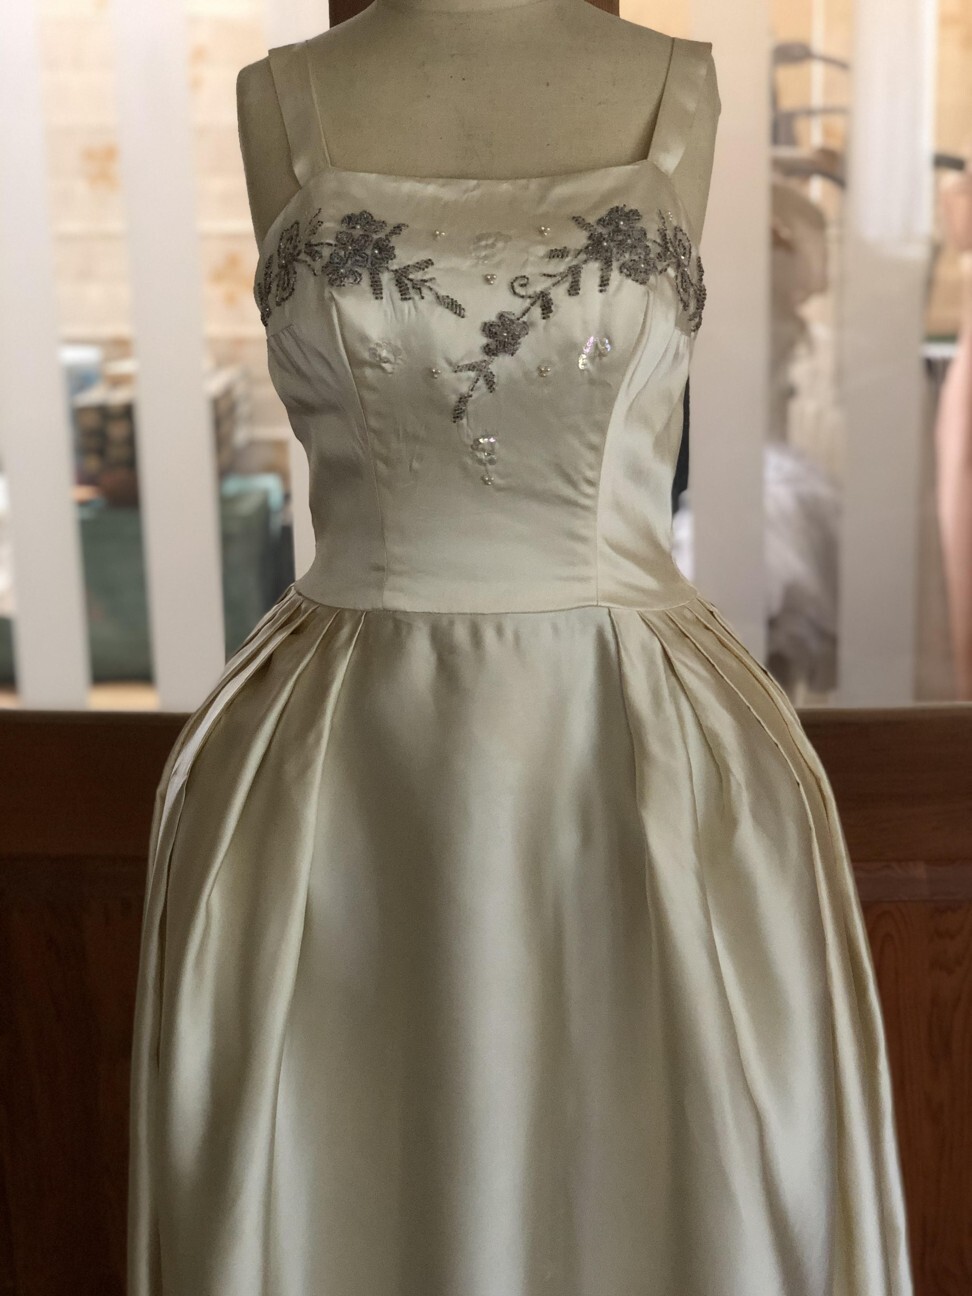 can taffeta wedding dresses be vintage